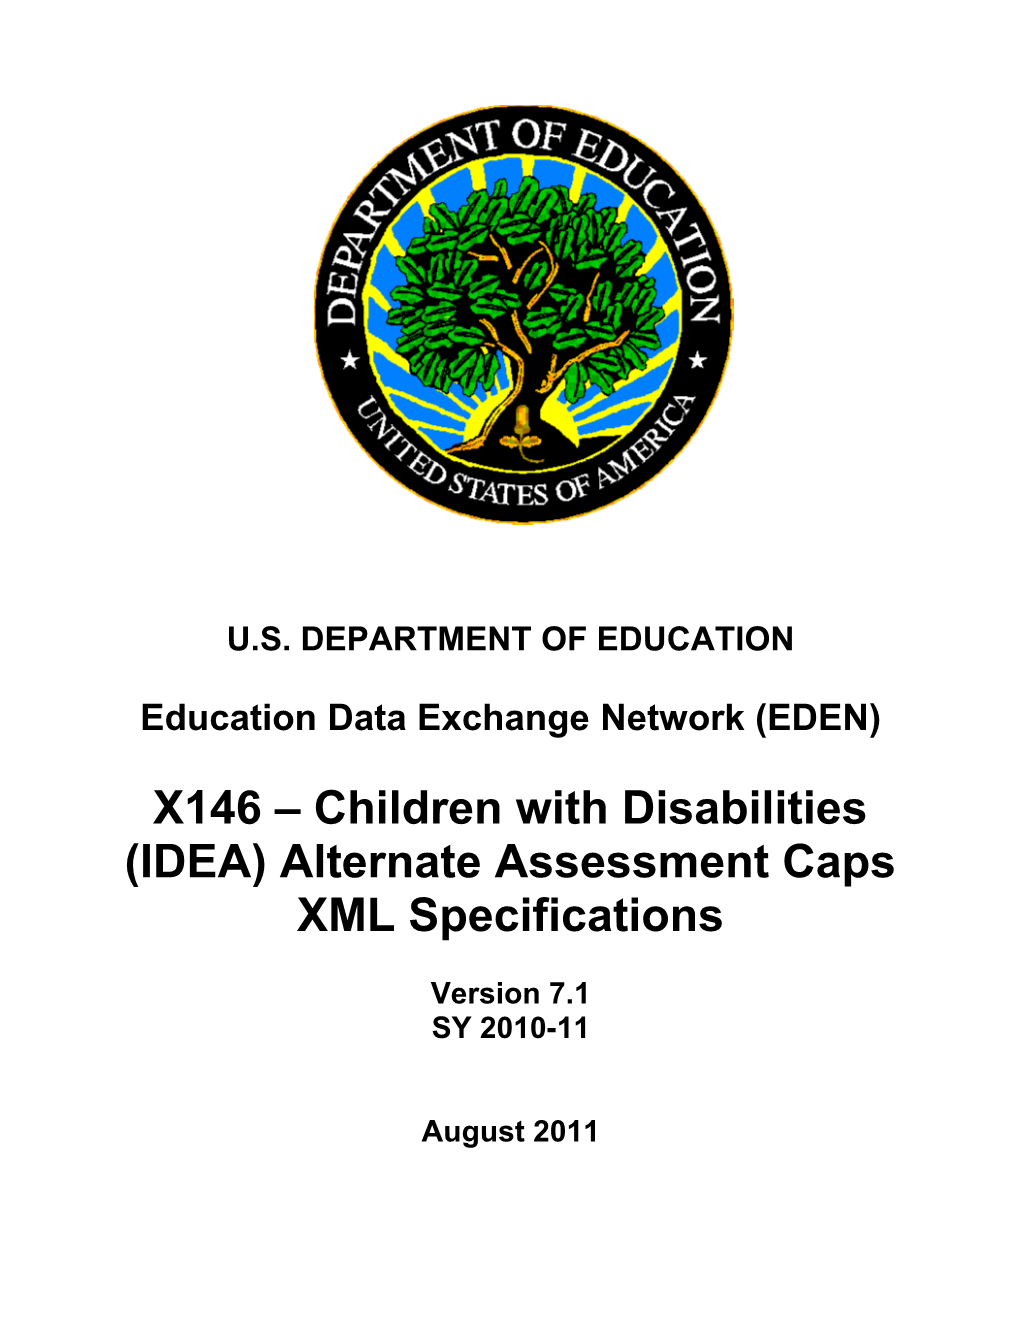 Children with Disabilities (IDEA) Alternate Assessment Caps XML Specifications